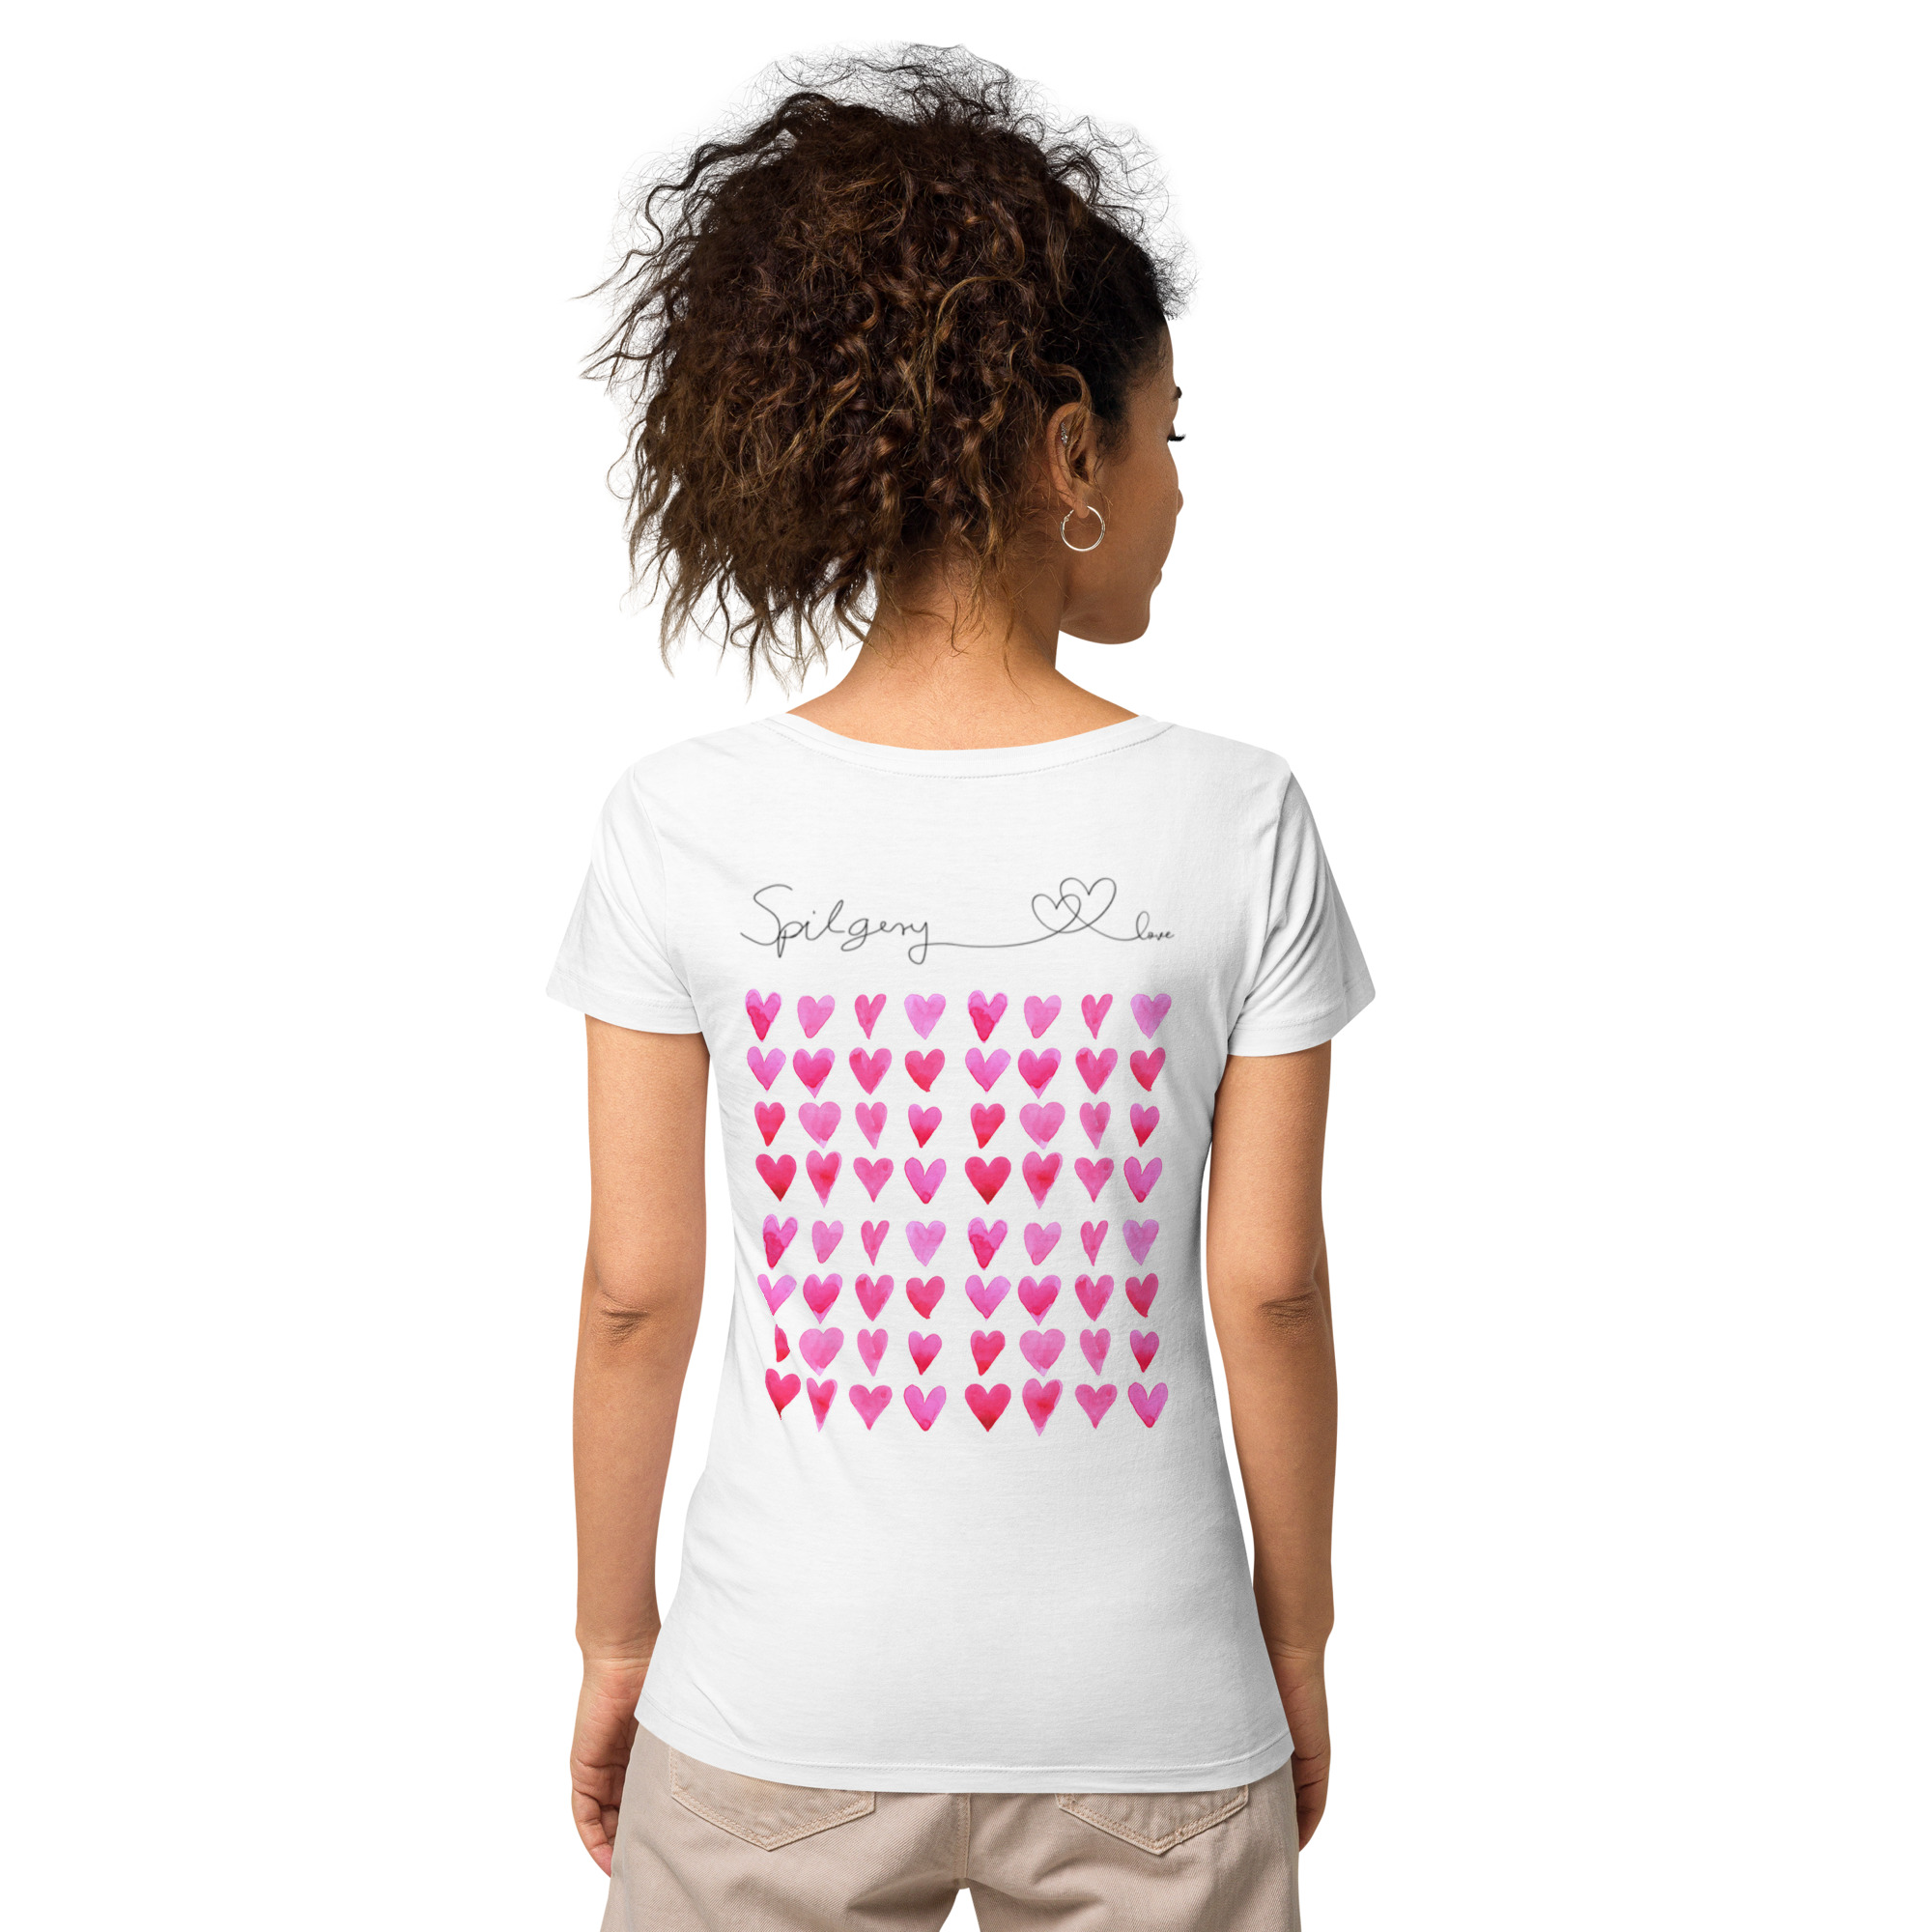 SPILGERY - Basic organic t-shirt women / Valentine Hearts edition -  SPILGERY - The Style Changer